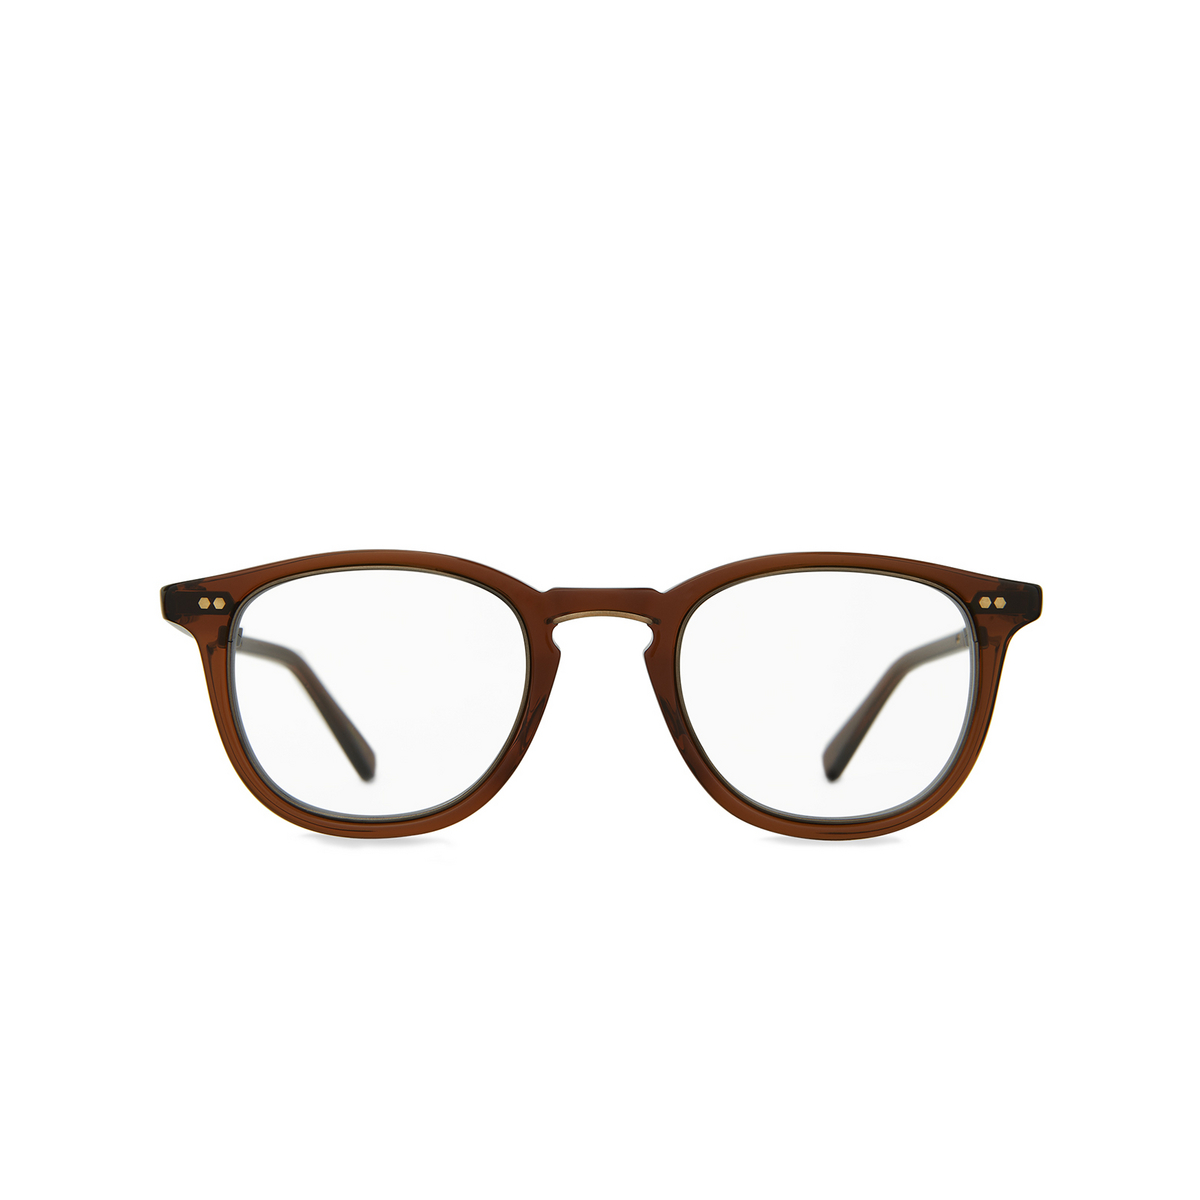 Mr. Leight® Square Eyeglasses: Coopers C color Carmelita - Antique Gold Crmlta-atg - front view.